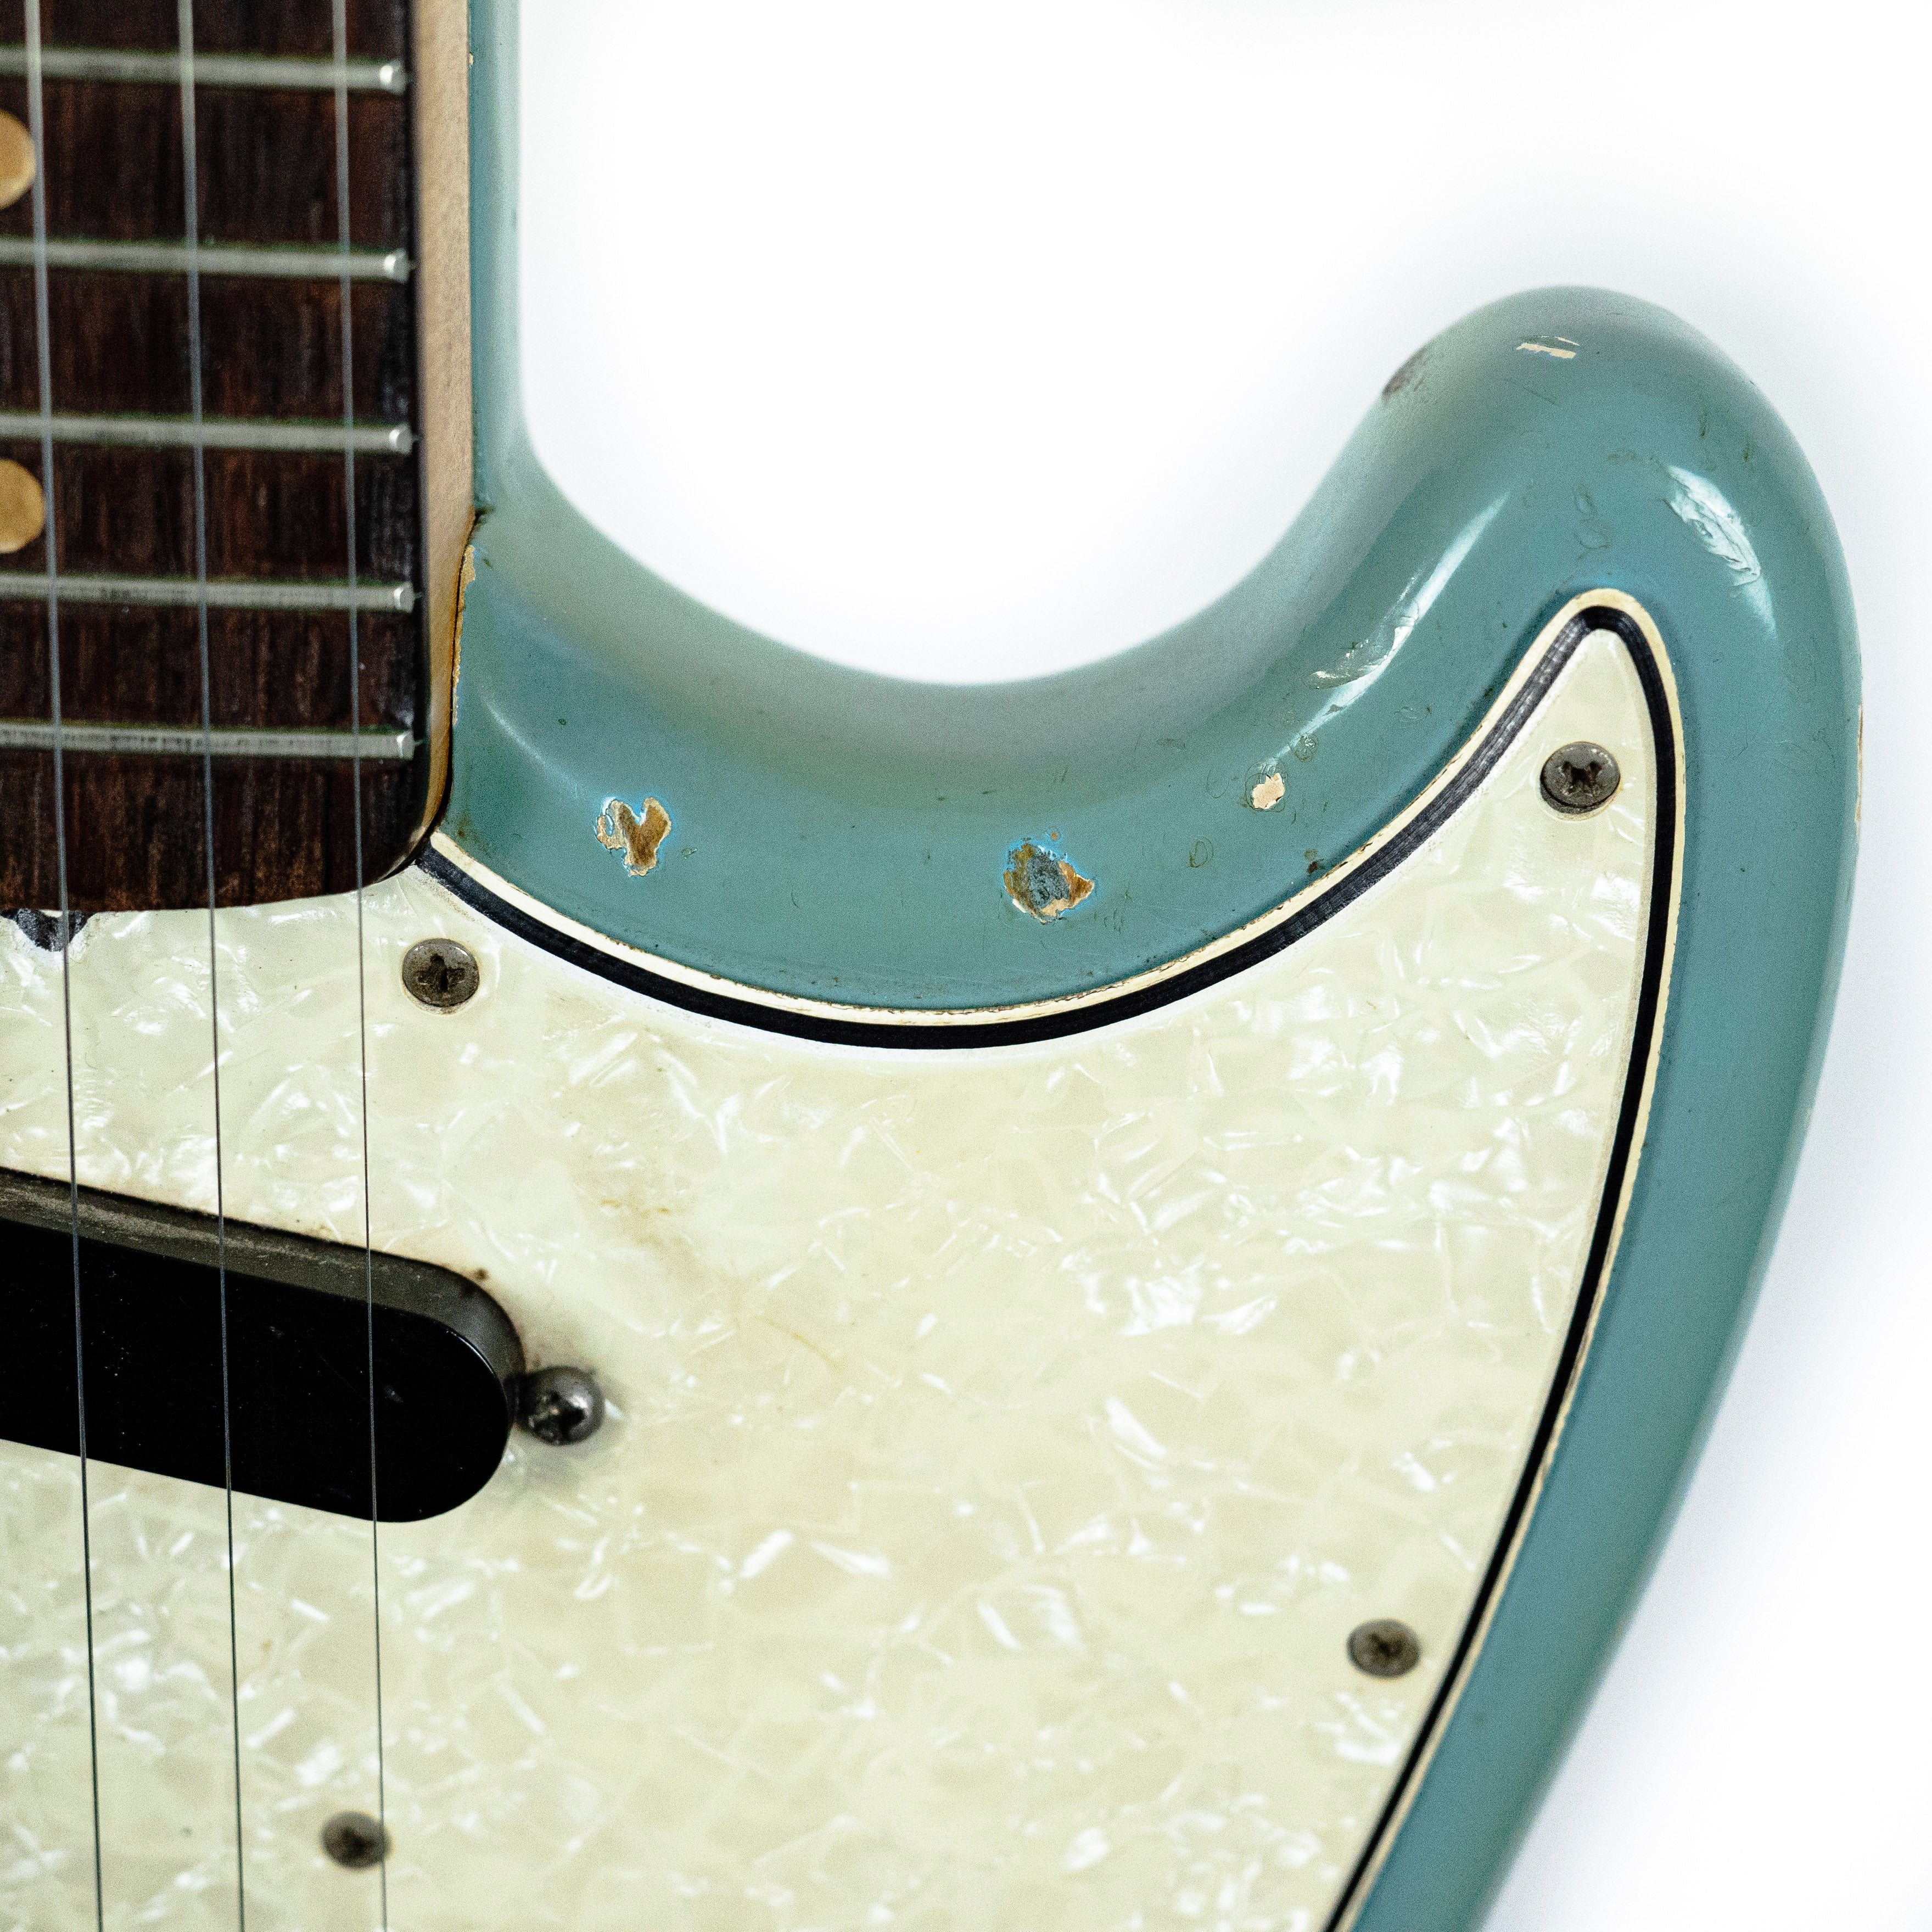 Fender 1964/65 Mustang Daphne Blue